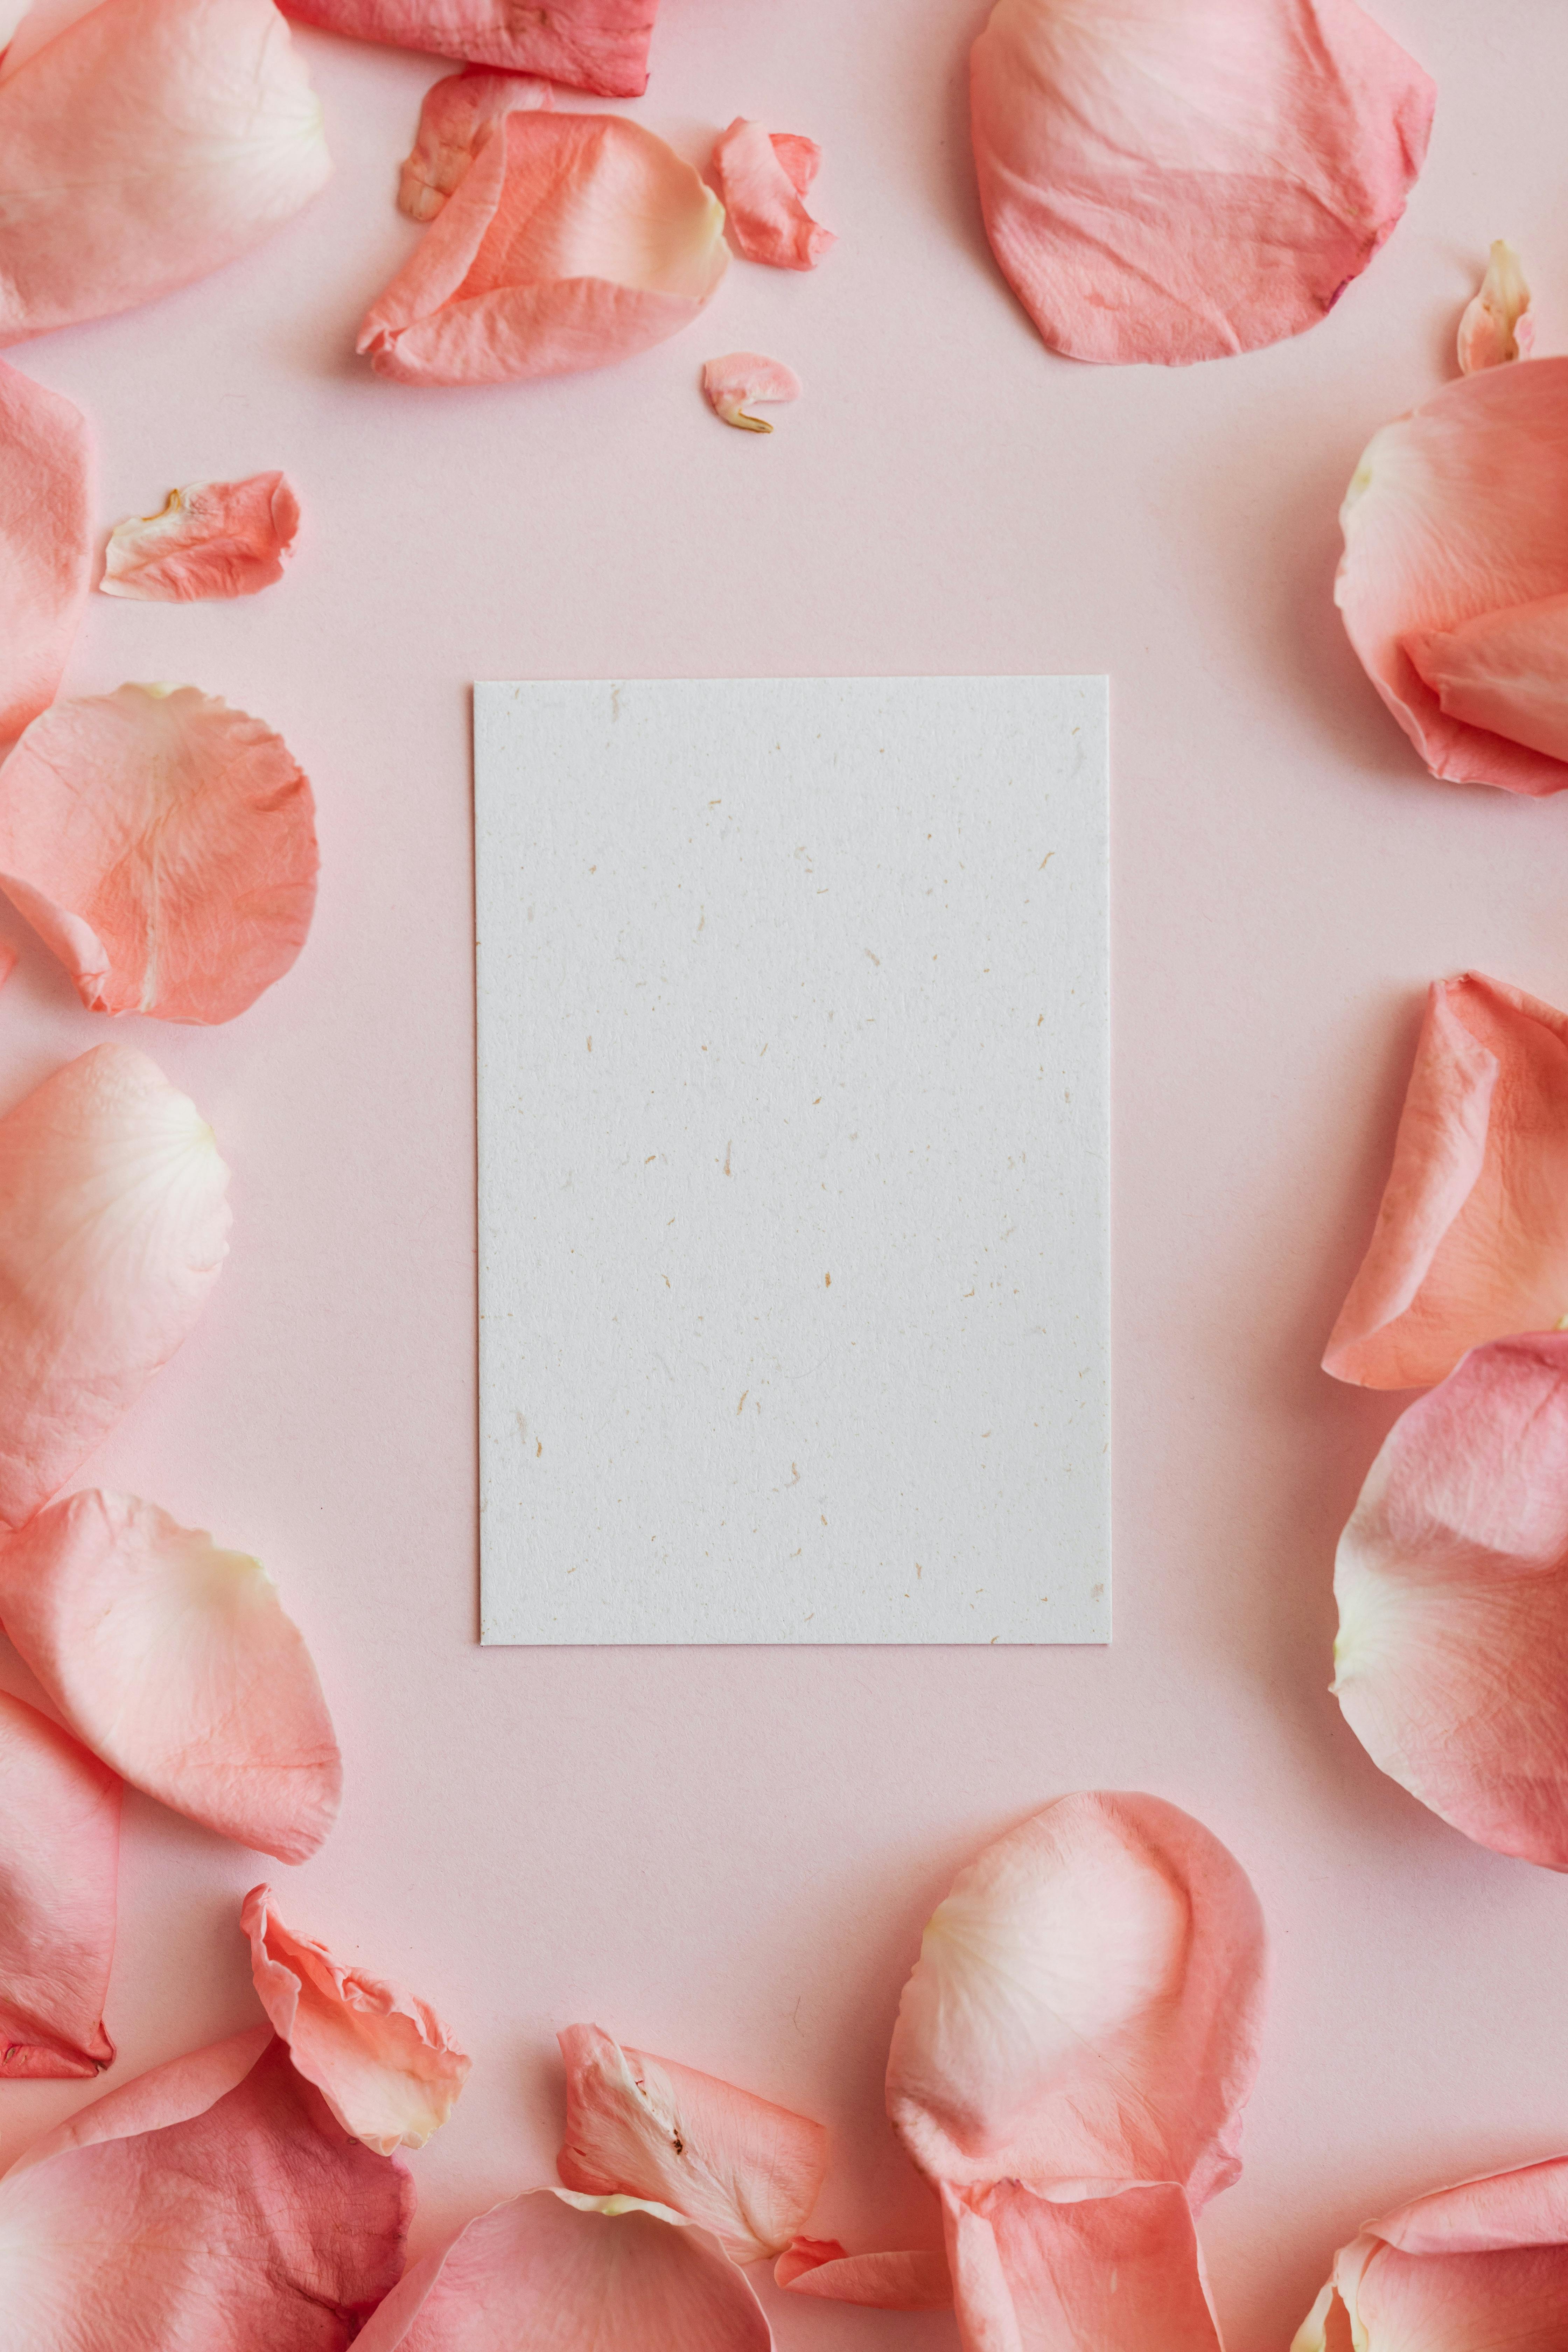 empty card among pink rose petals